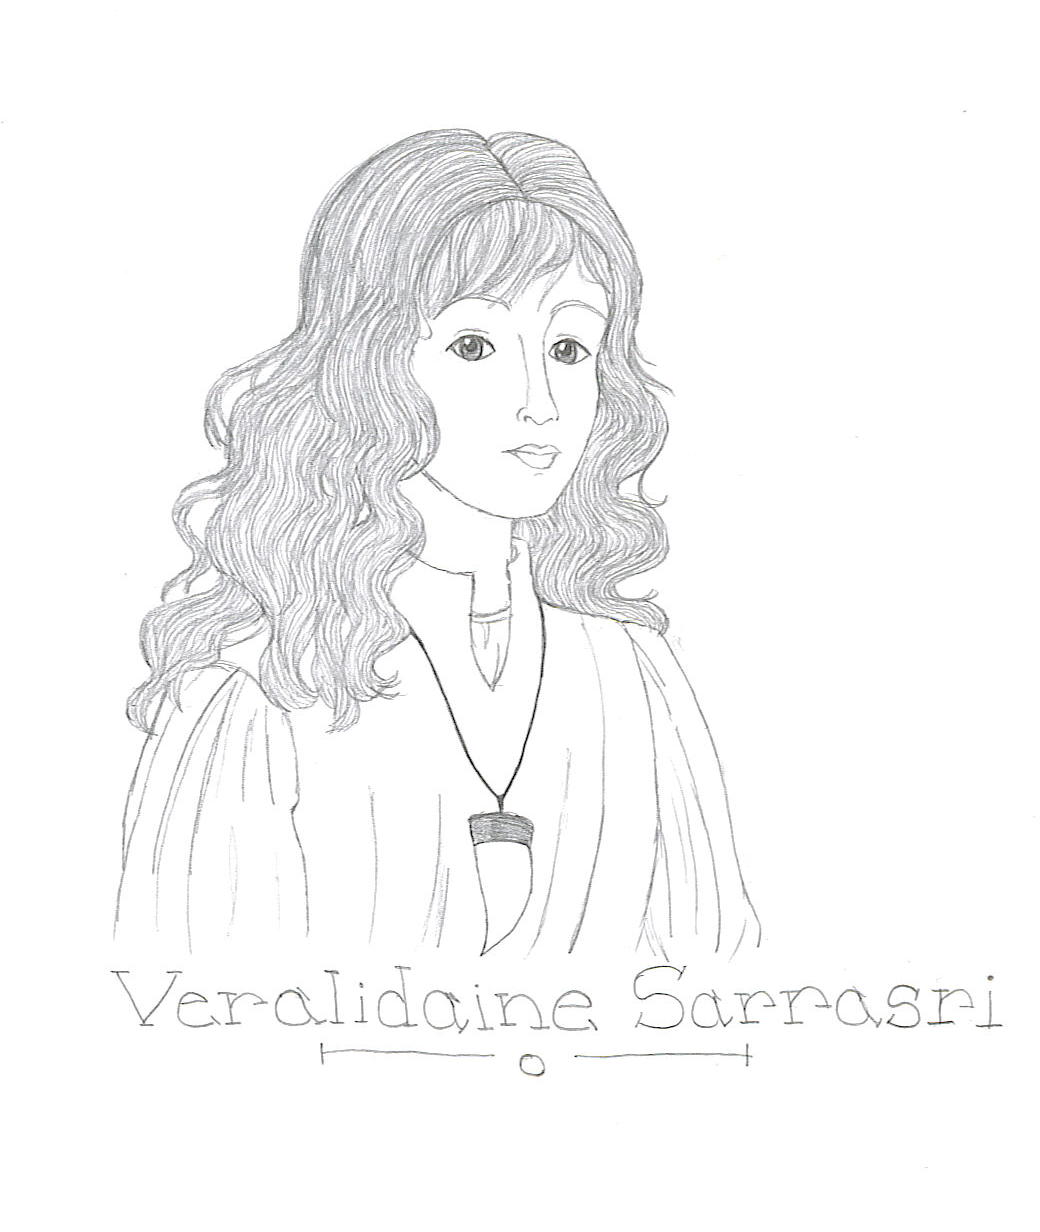 Veralidaine Sarrasri by AnimeMangaLover